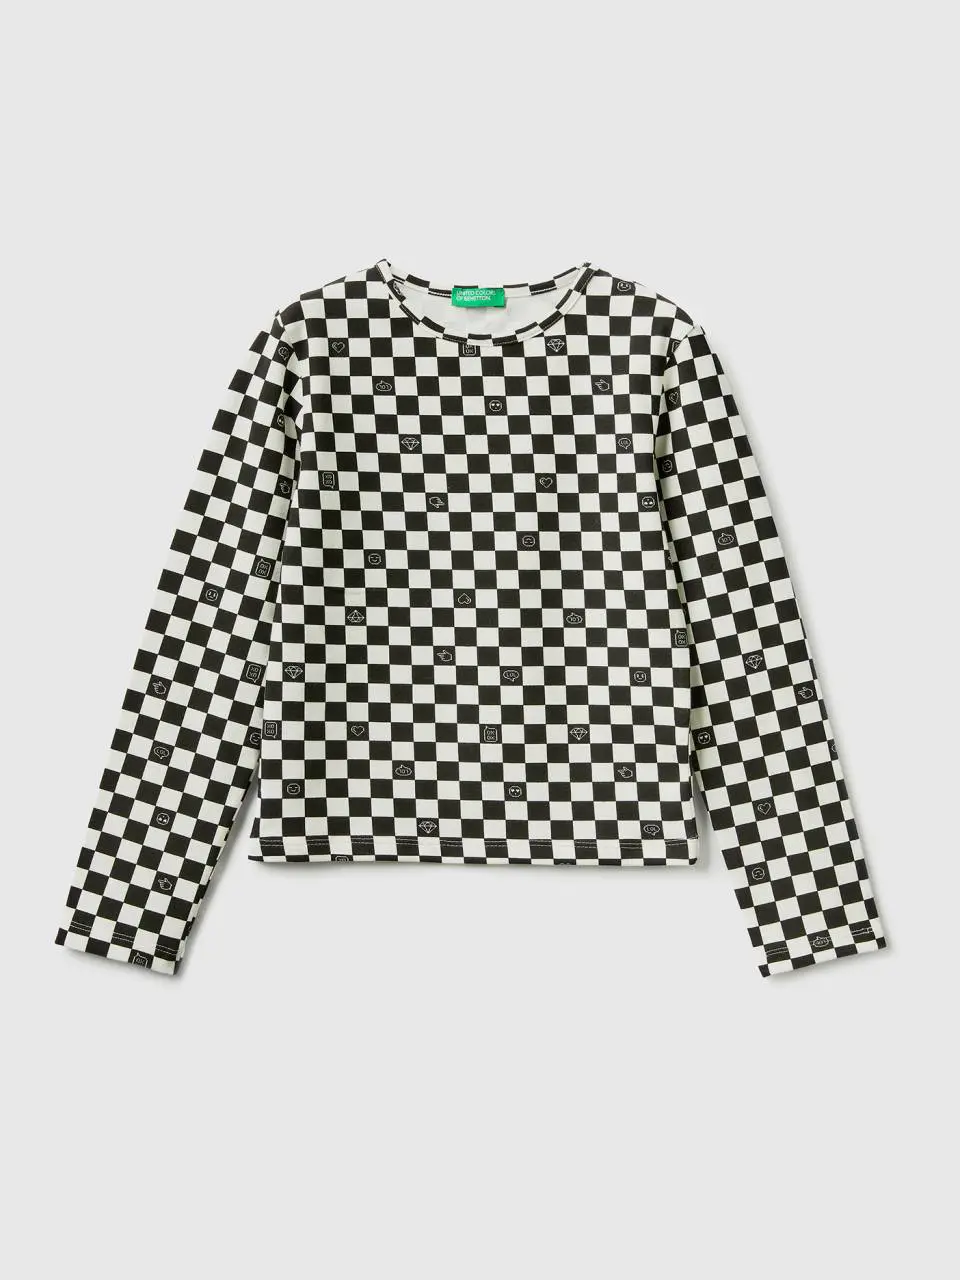 Benetton checkered stretch cotton t-shirt. 1